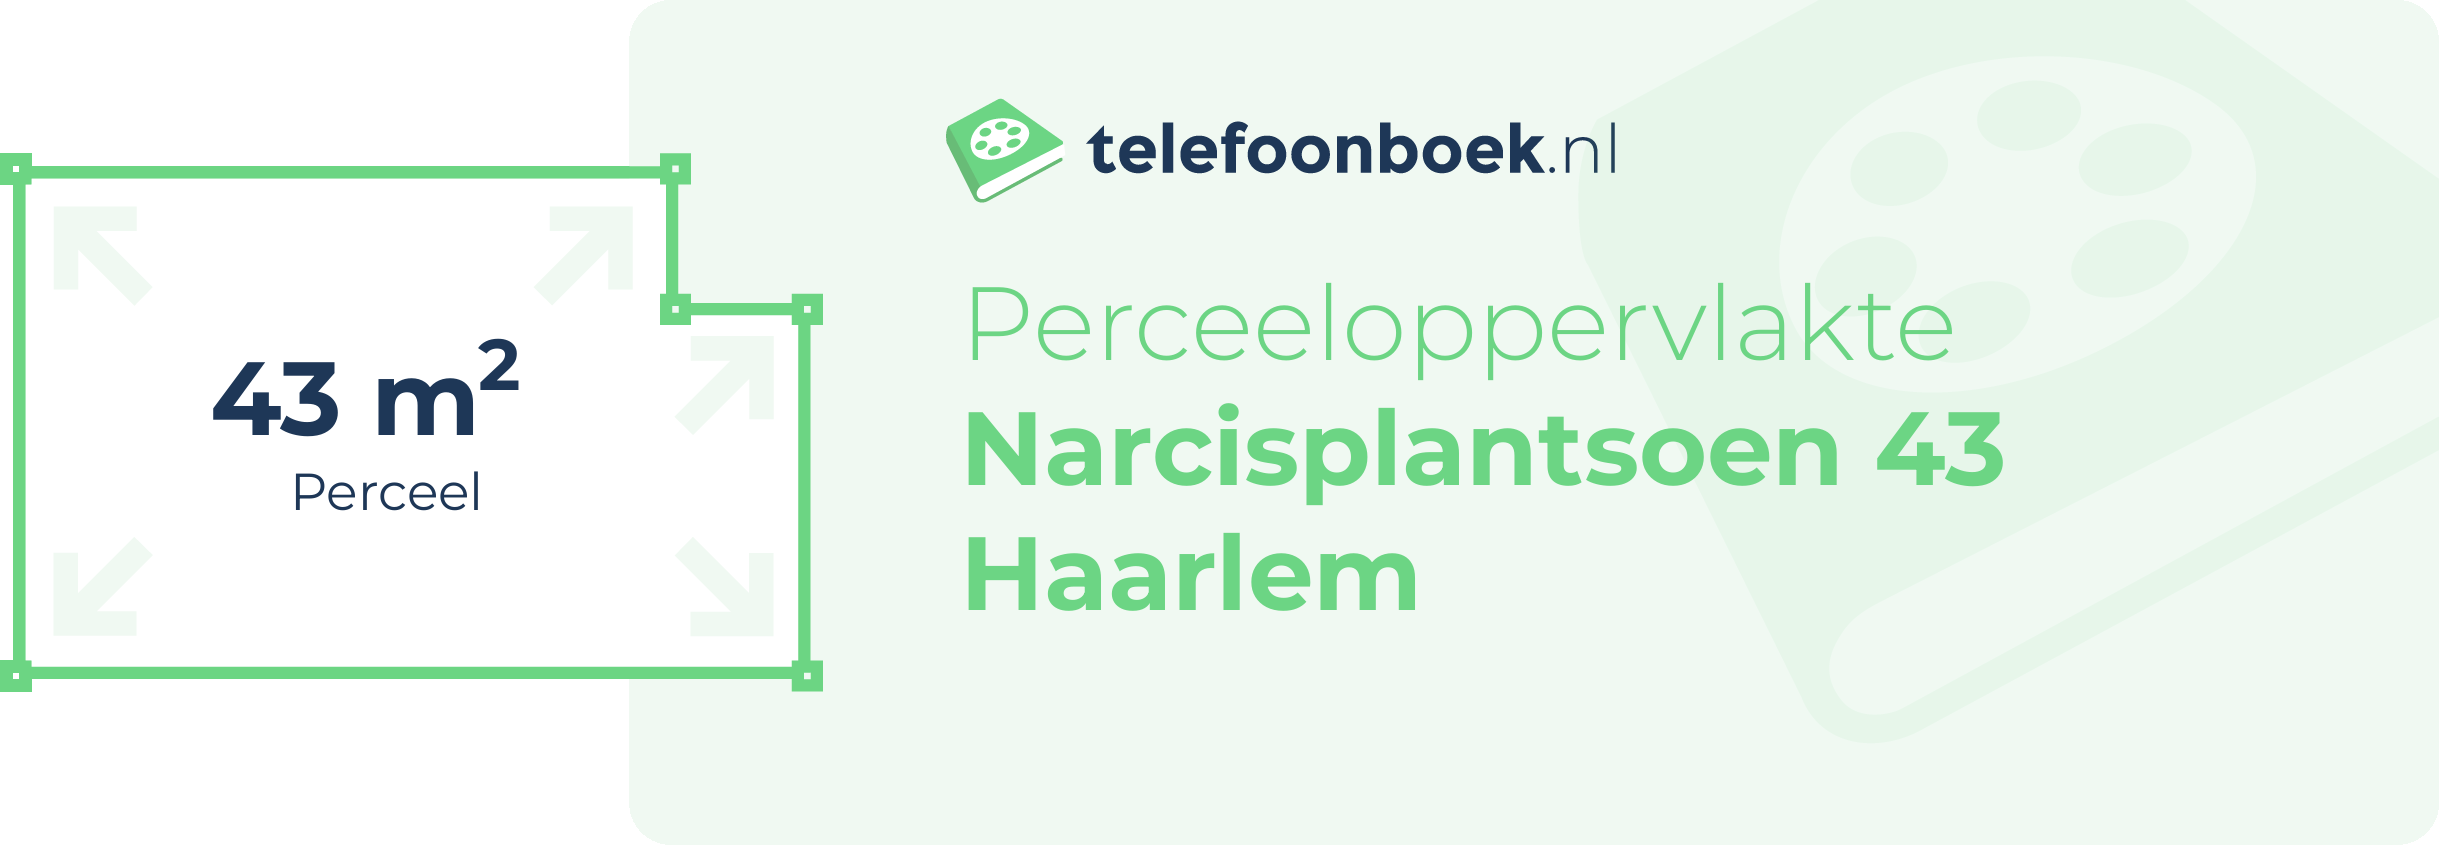 Perceeloppervlakte Narcisplantsoen 43 Haarlem